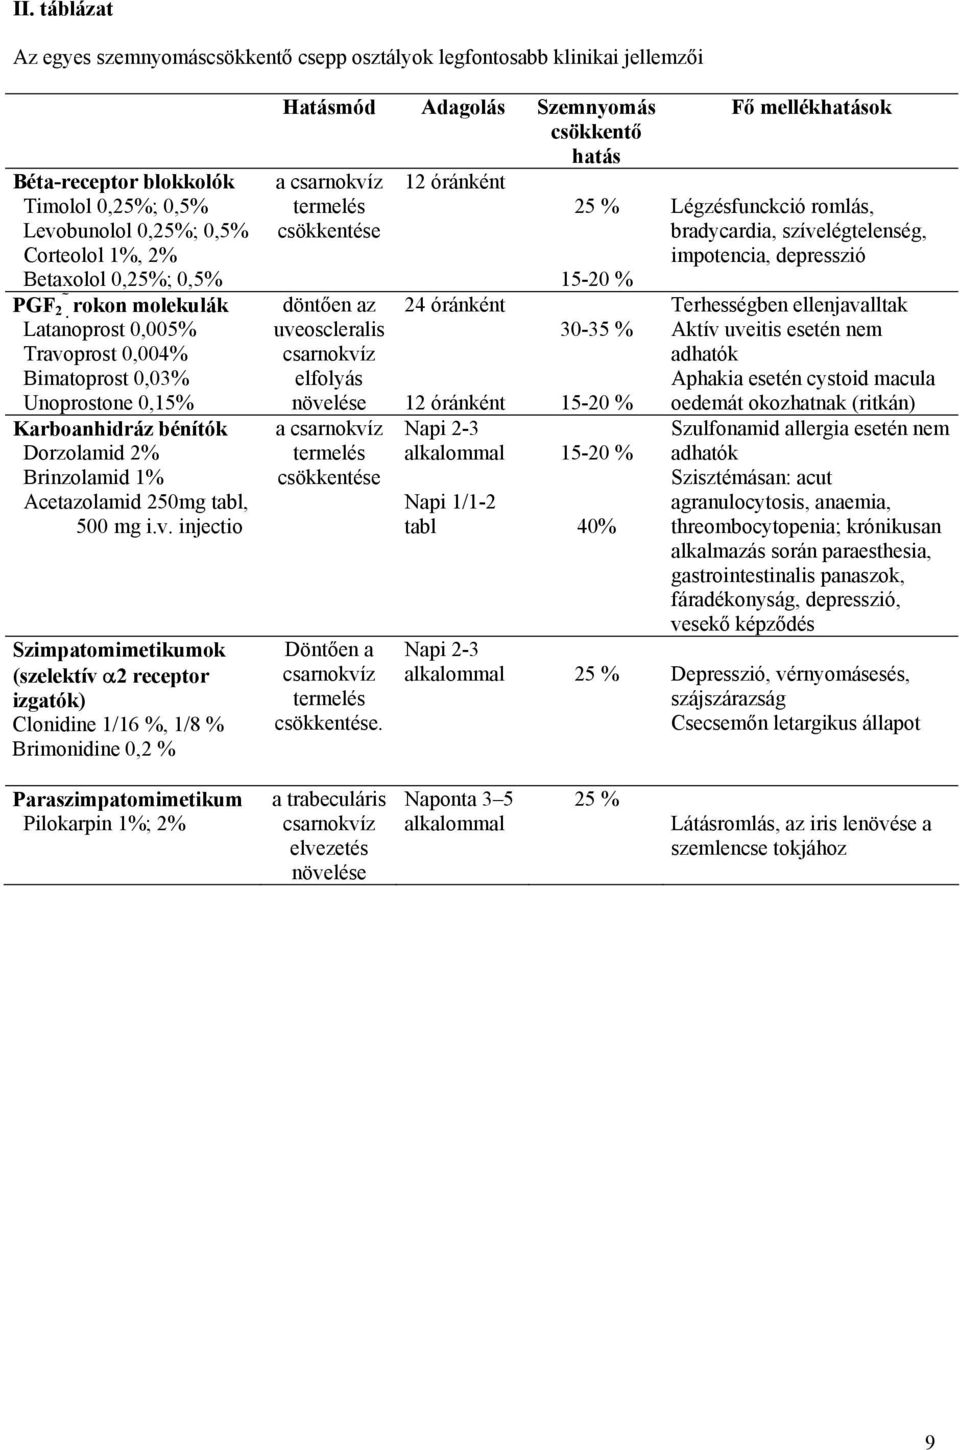 prost 0,004% Bimatoprost 0,03% Unoprostone 0,15% Karboanhidráz bénítók Dorzolamid 2% Brinzolamid 1% Acetazolamid 250mg tabl, 500 mg i.v.